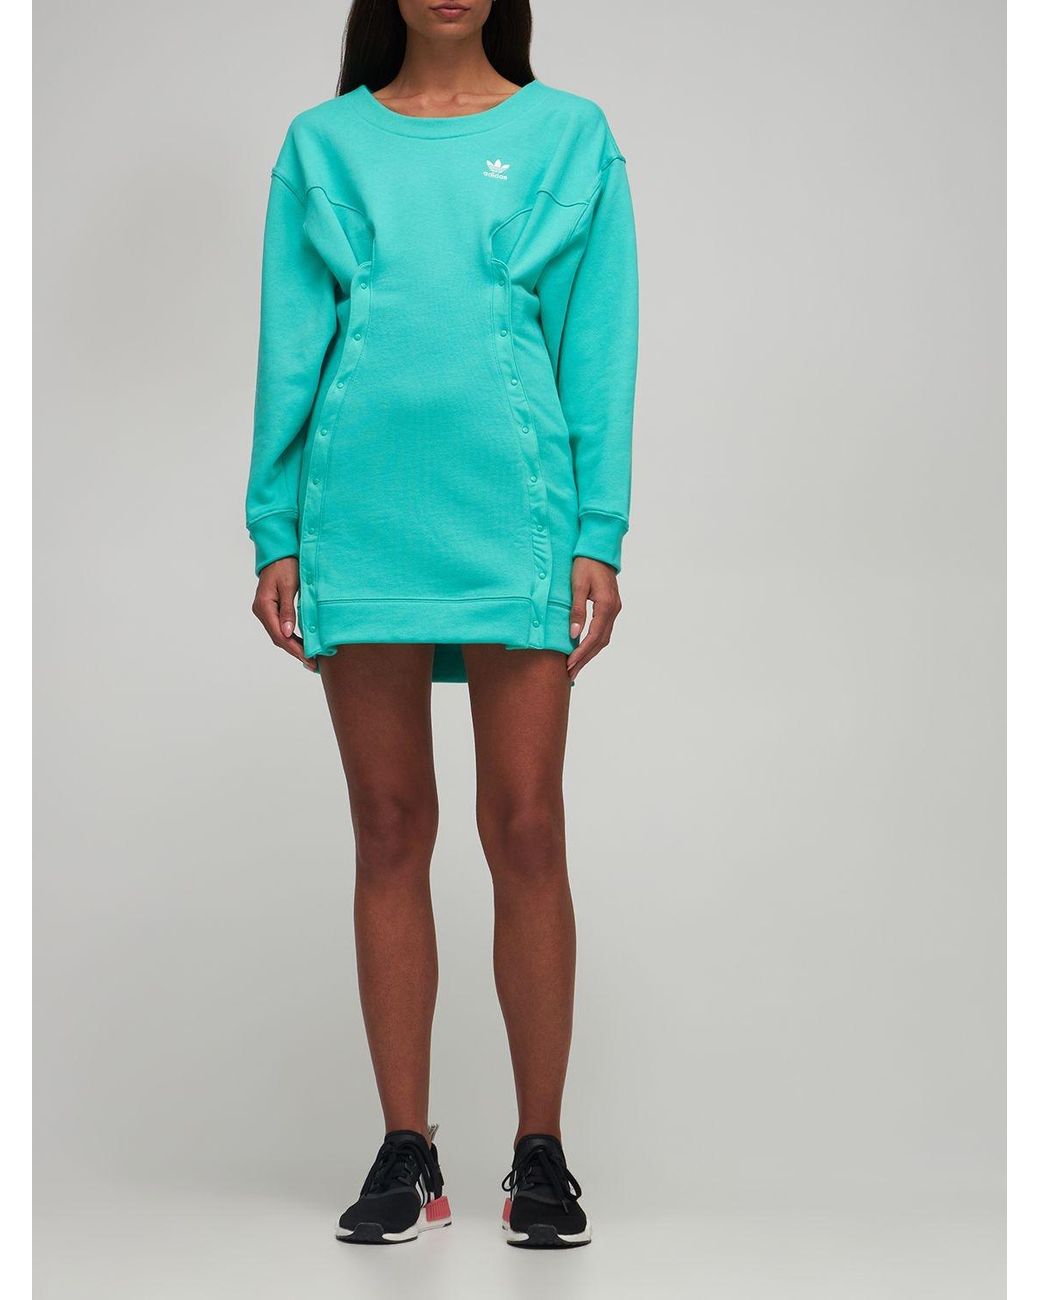 adidas Originals Cotton Sweat Dress W/ Snaps in Blue | Lyst